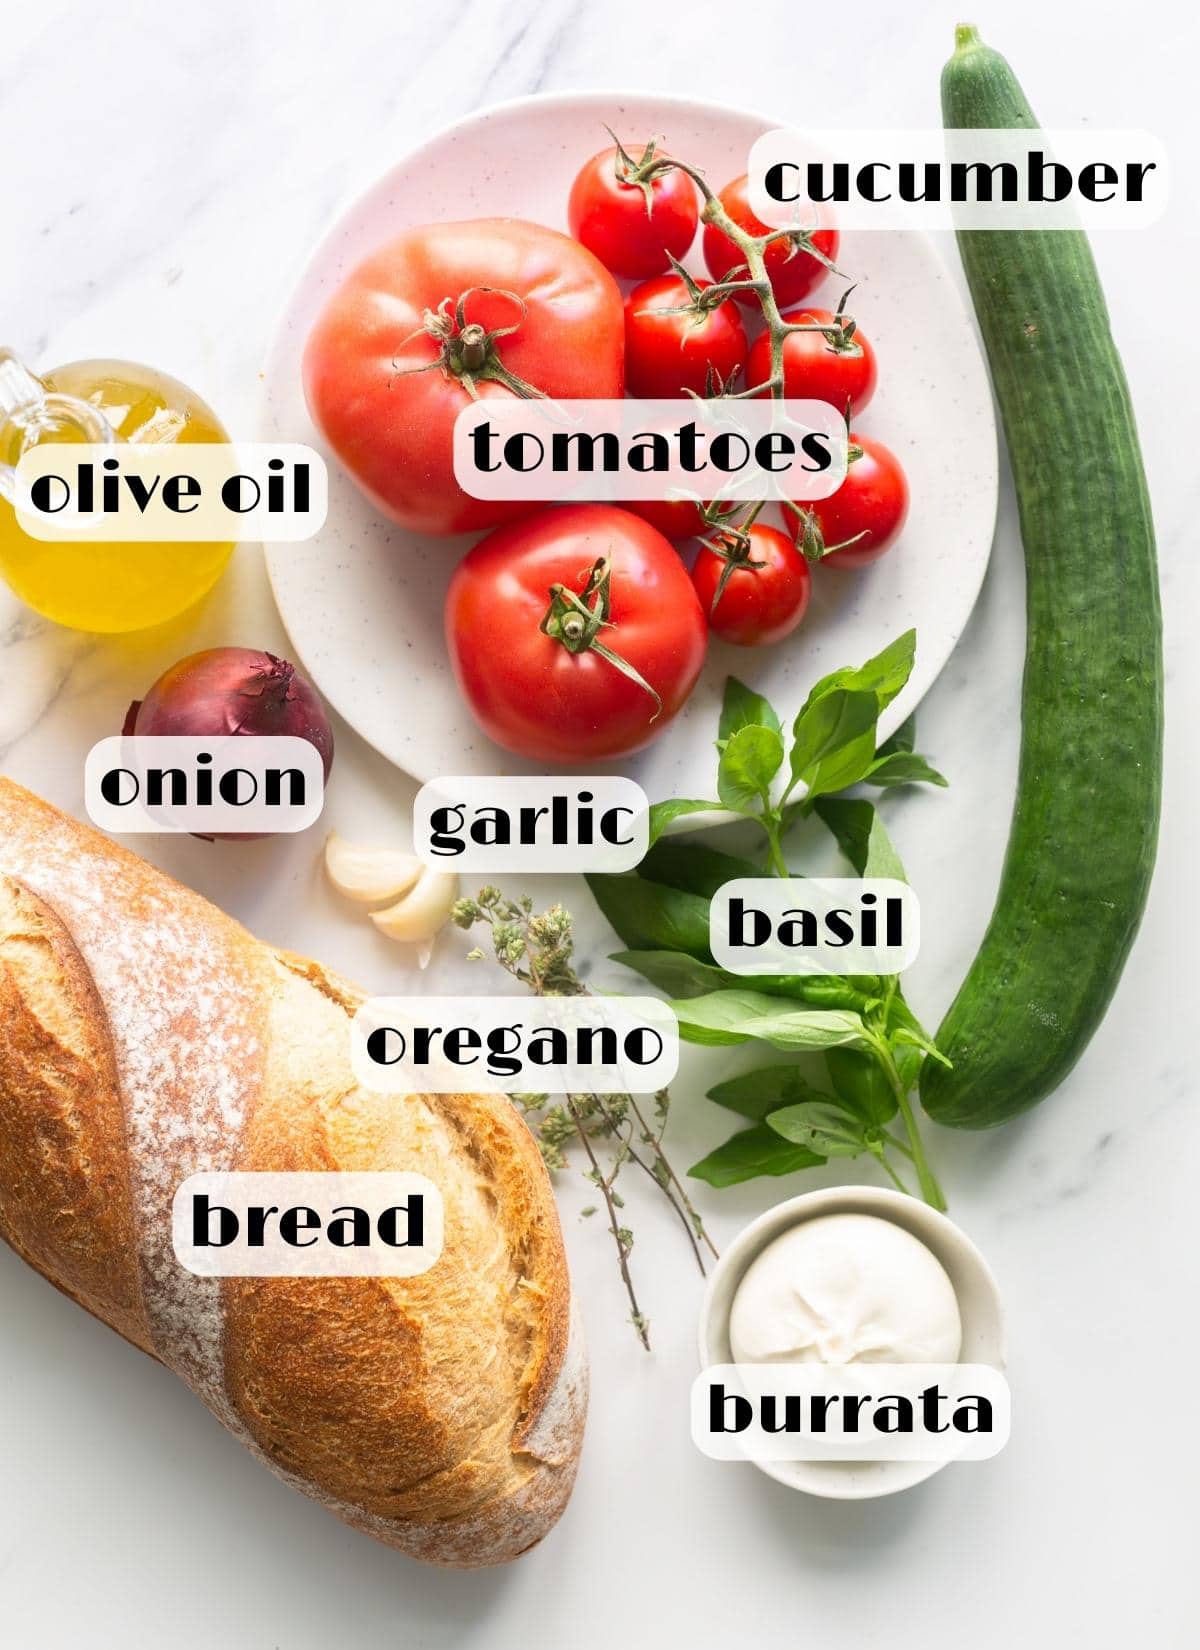 burrata panzanella ingredients: burrata, stale bread, tomatoes, basil, cucumber, garlic, onion, olive oil, oregano.